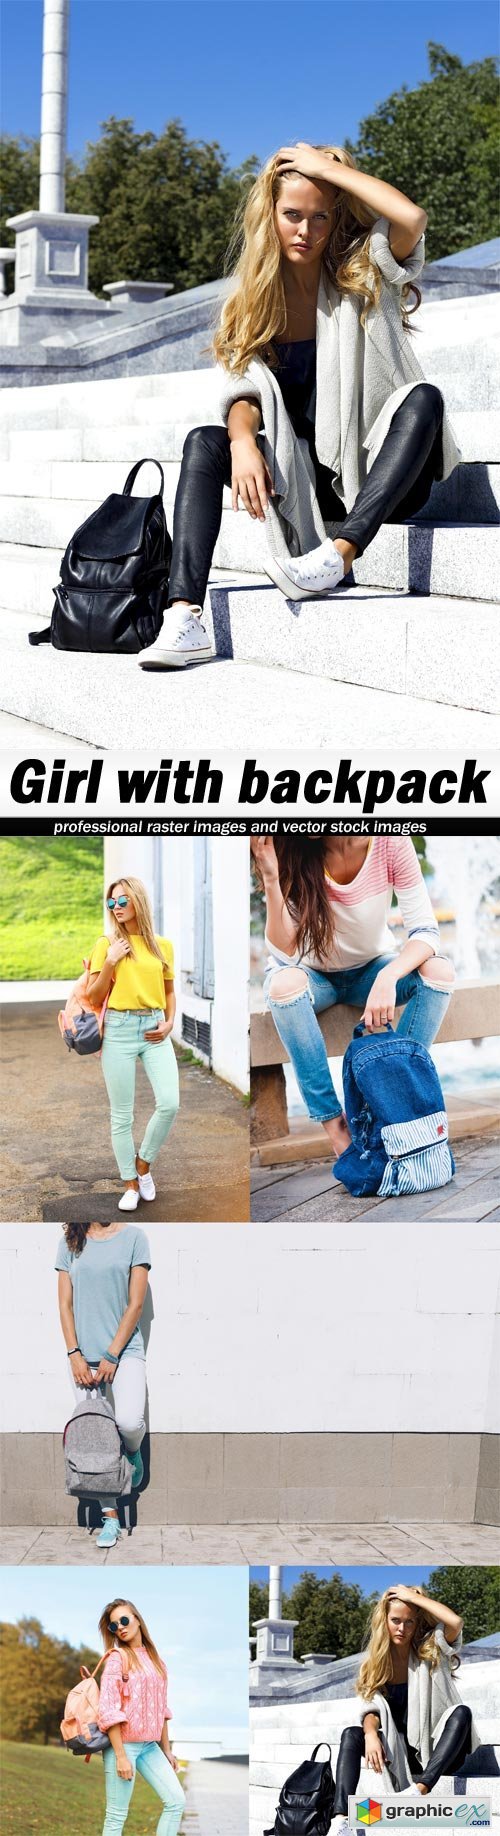 Girl with backpack - 5 UHQ JPEG